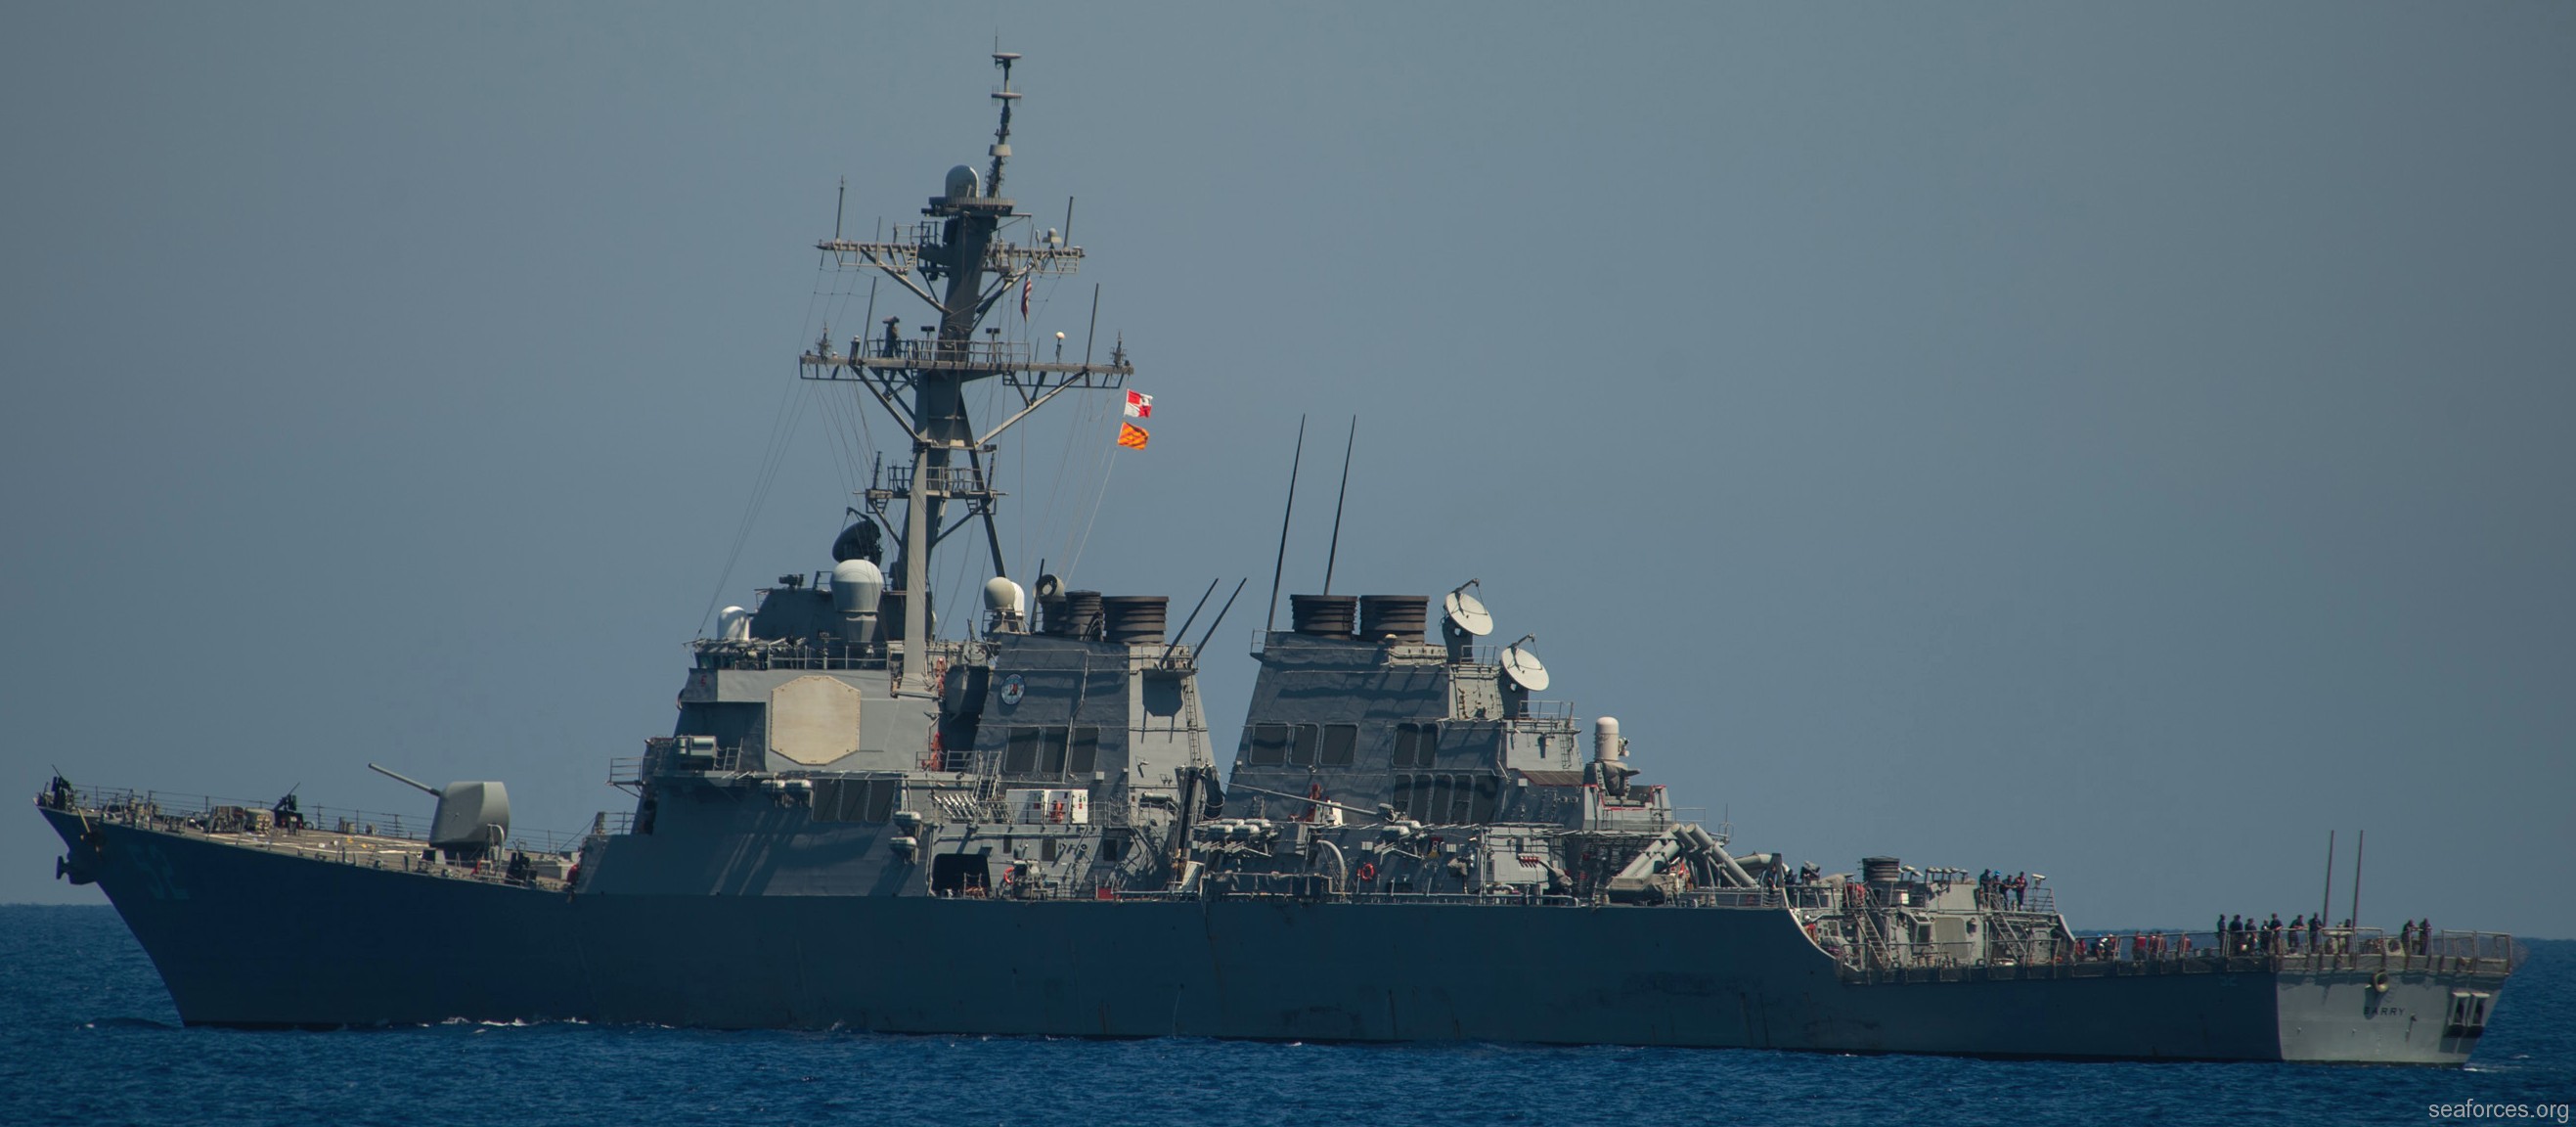 ddg-52 uss barry guided missile destroyer us navy 38